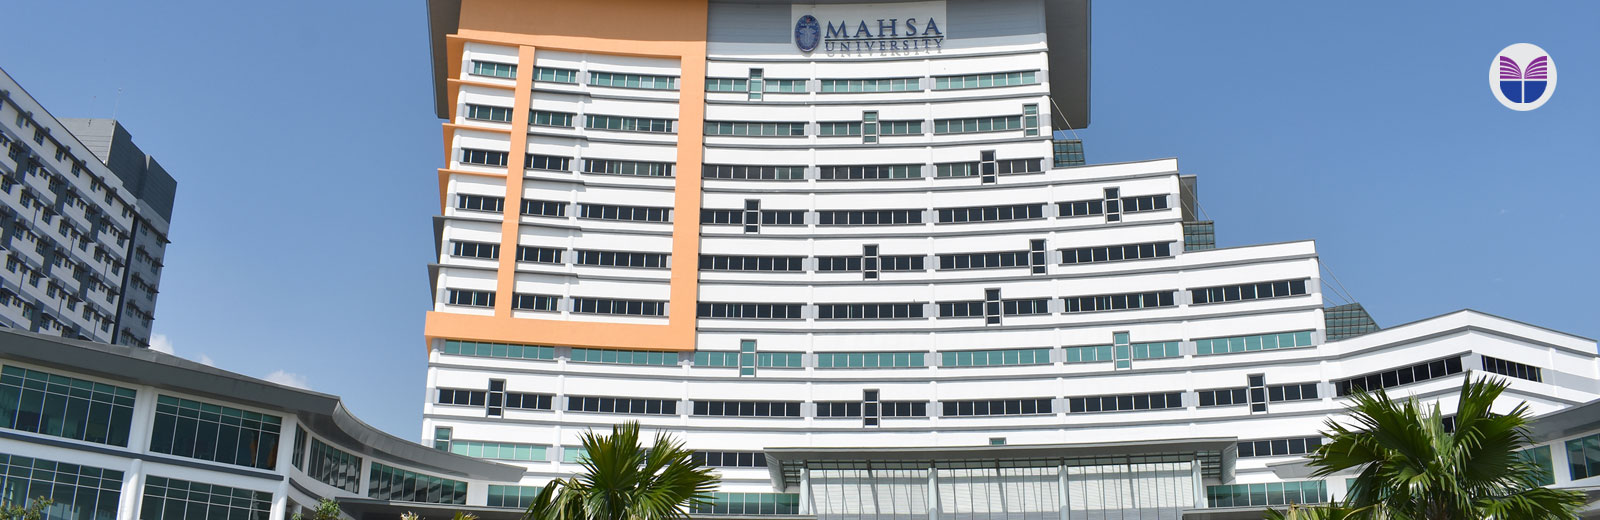 MAHSA University - Study Medicine | Pre Medicine | MBBS | MD | Doctor